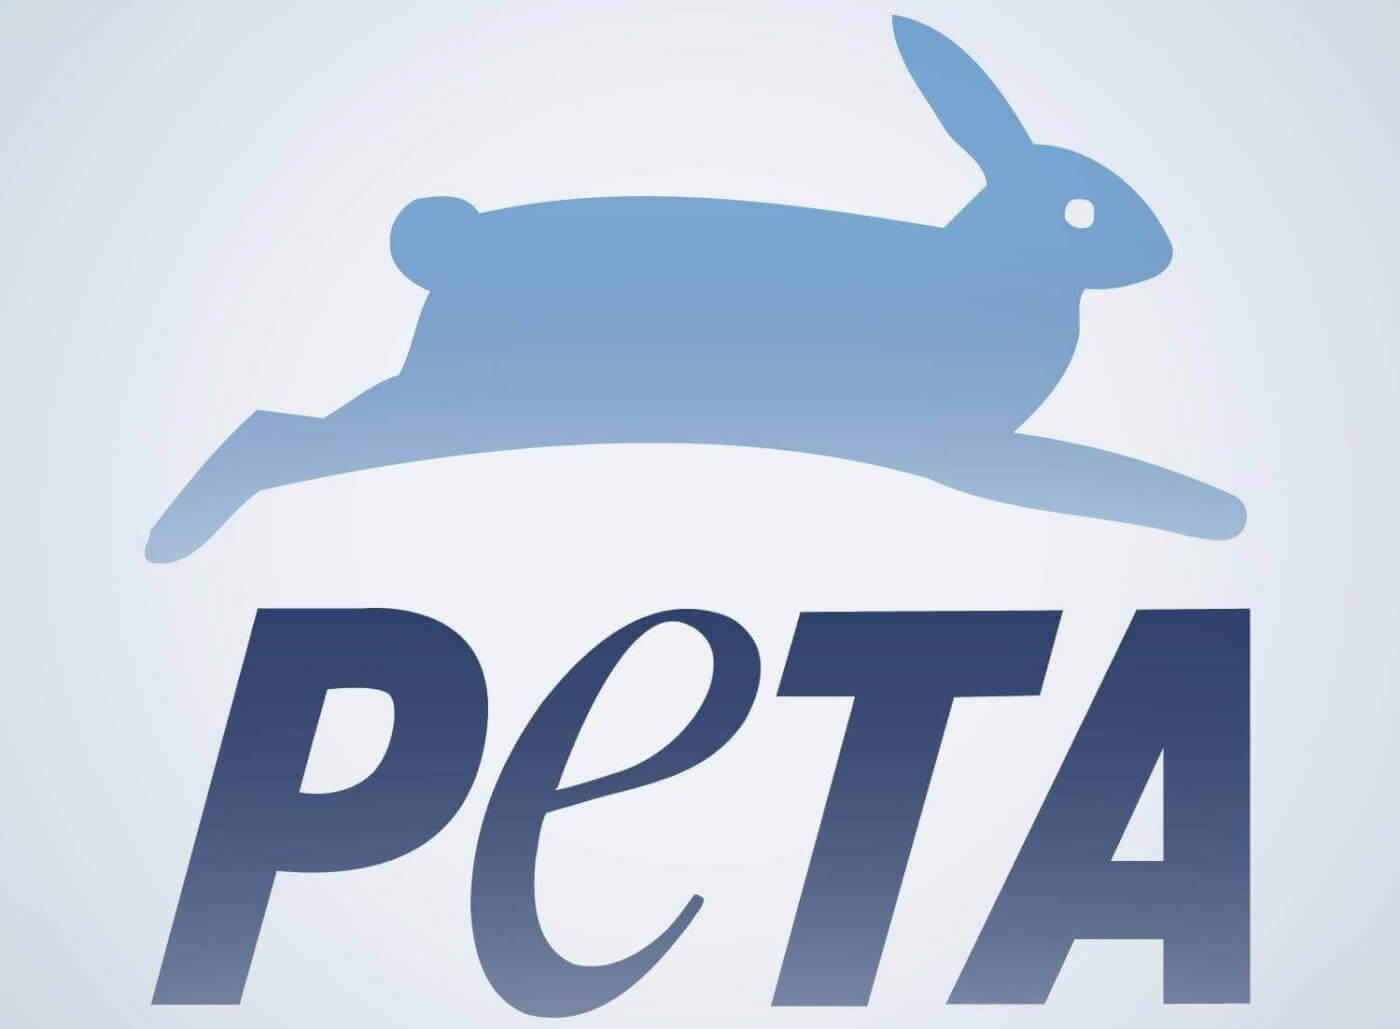 PETA Leaping Bunny logo